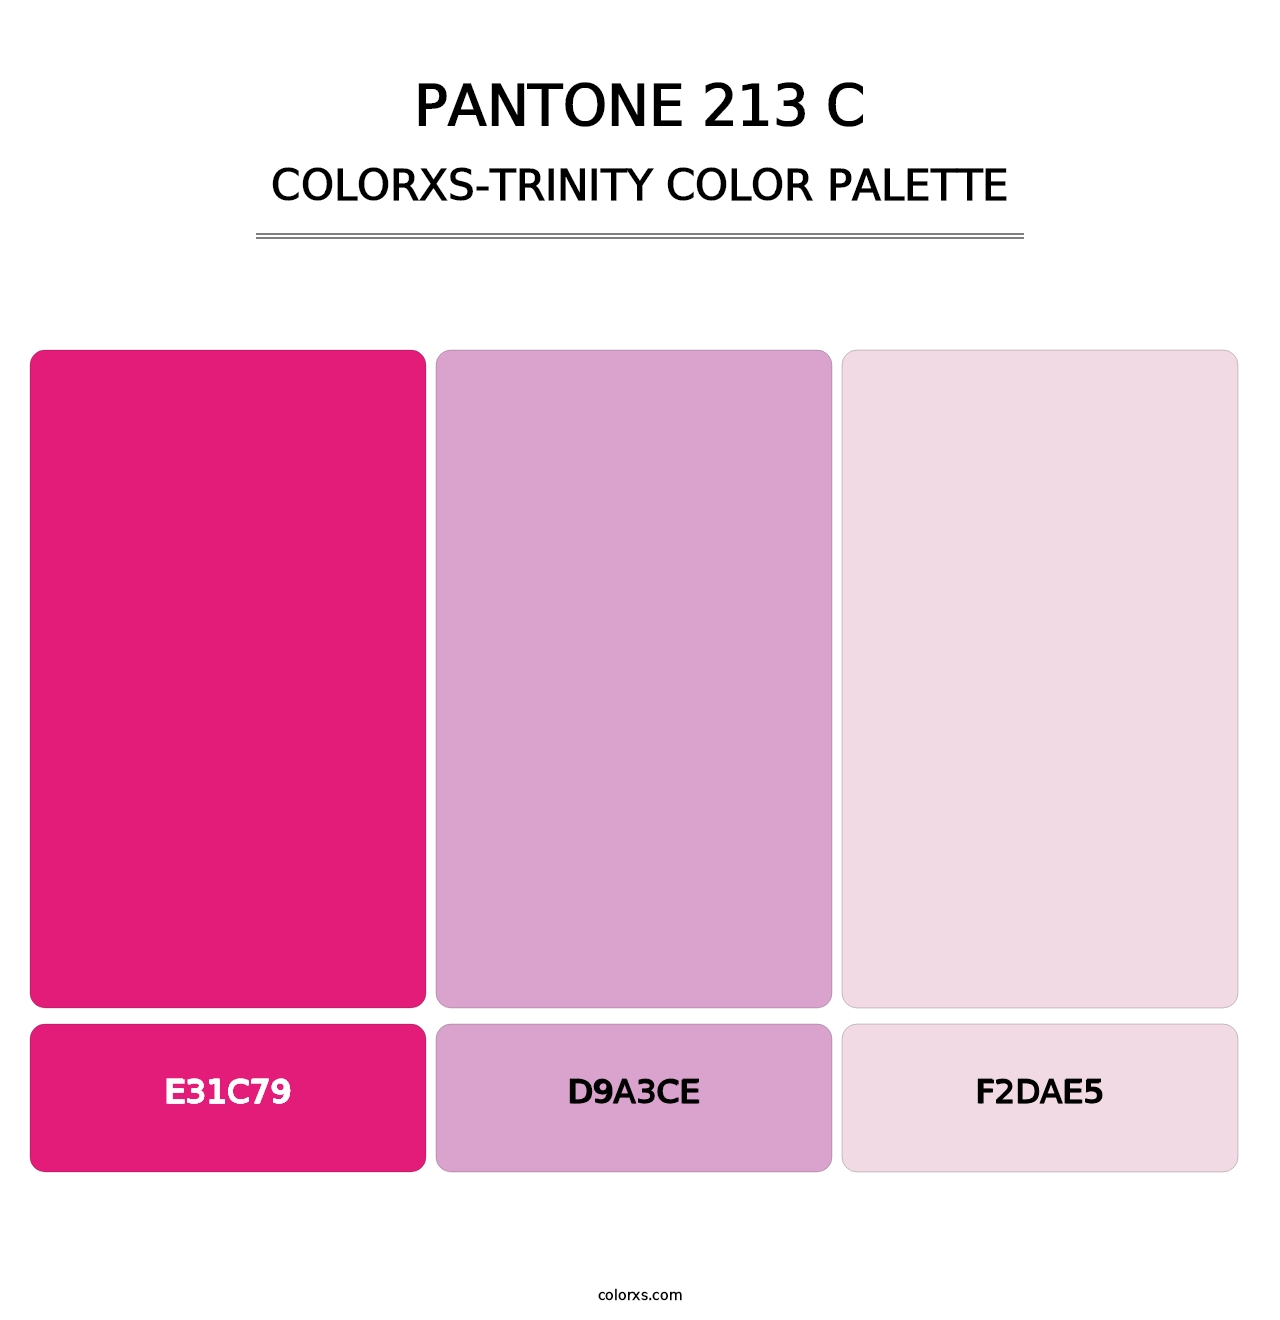 PANTONE 213 C - Colorxs Trinity Palette